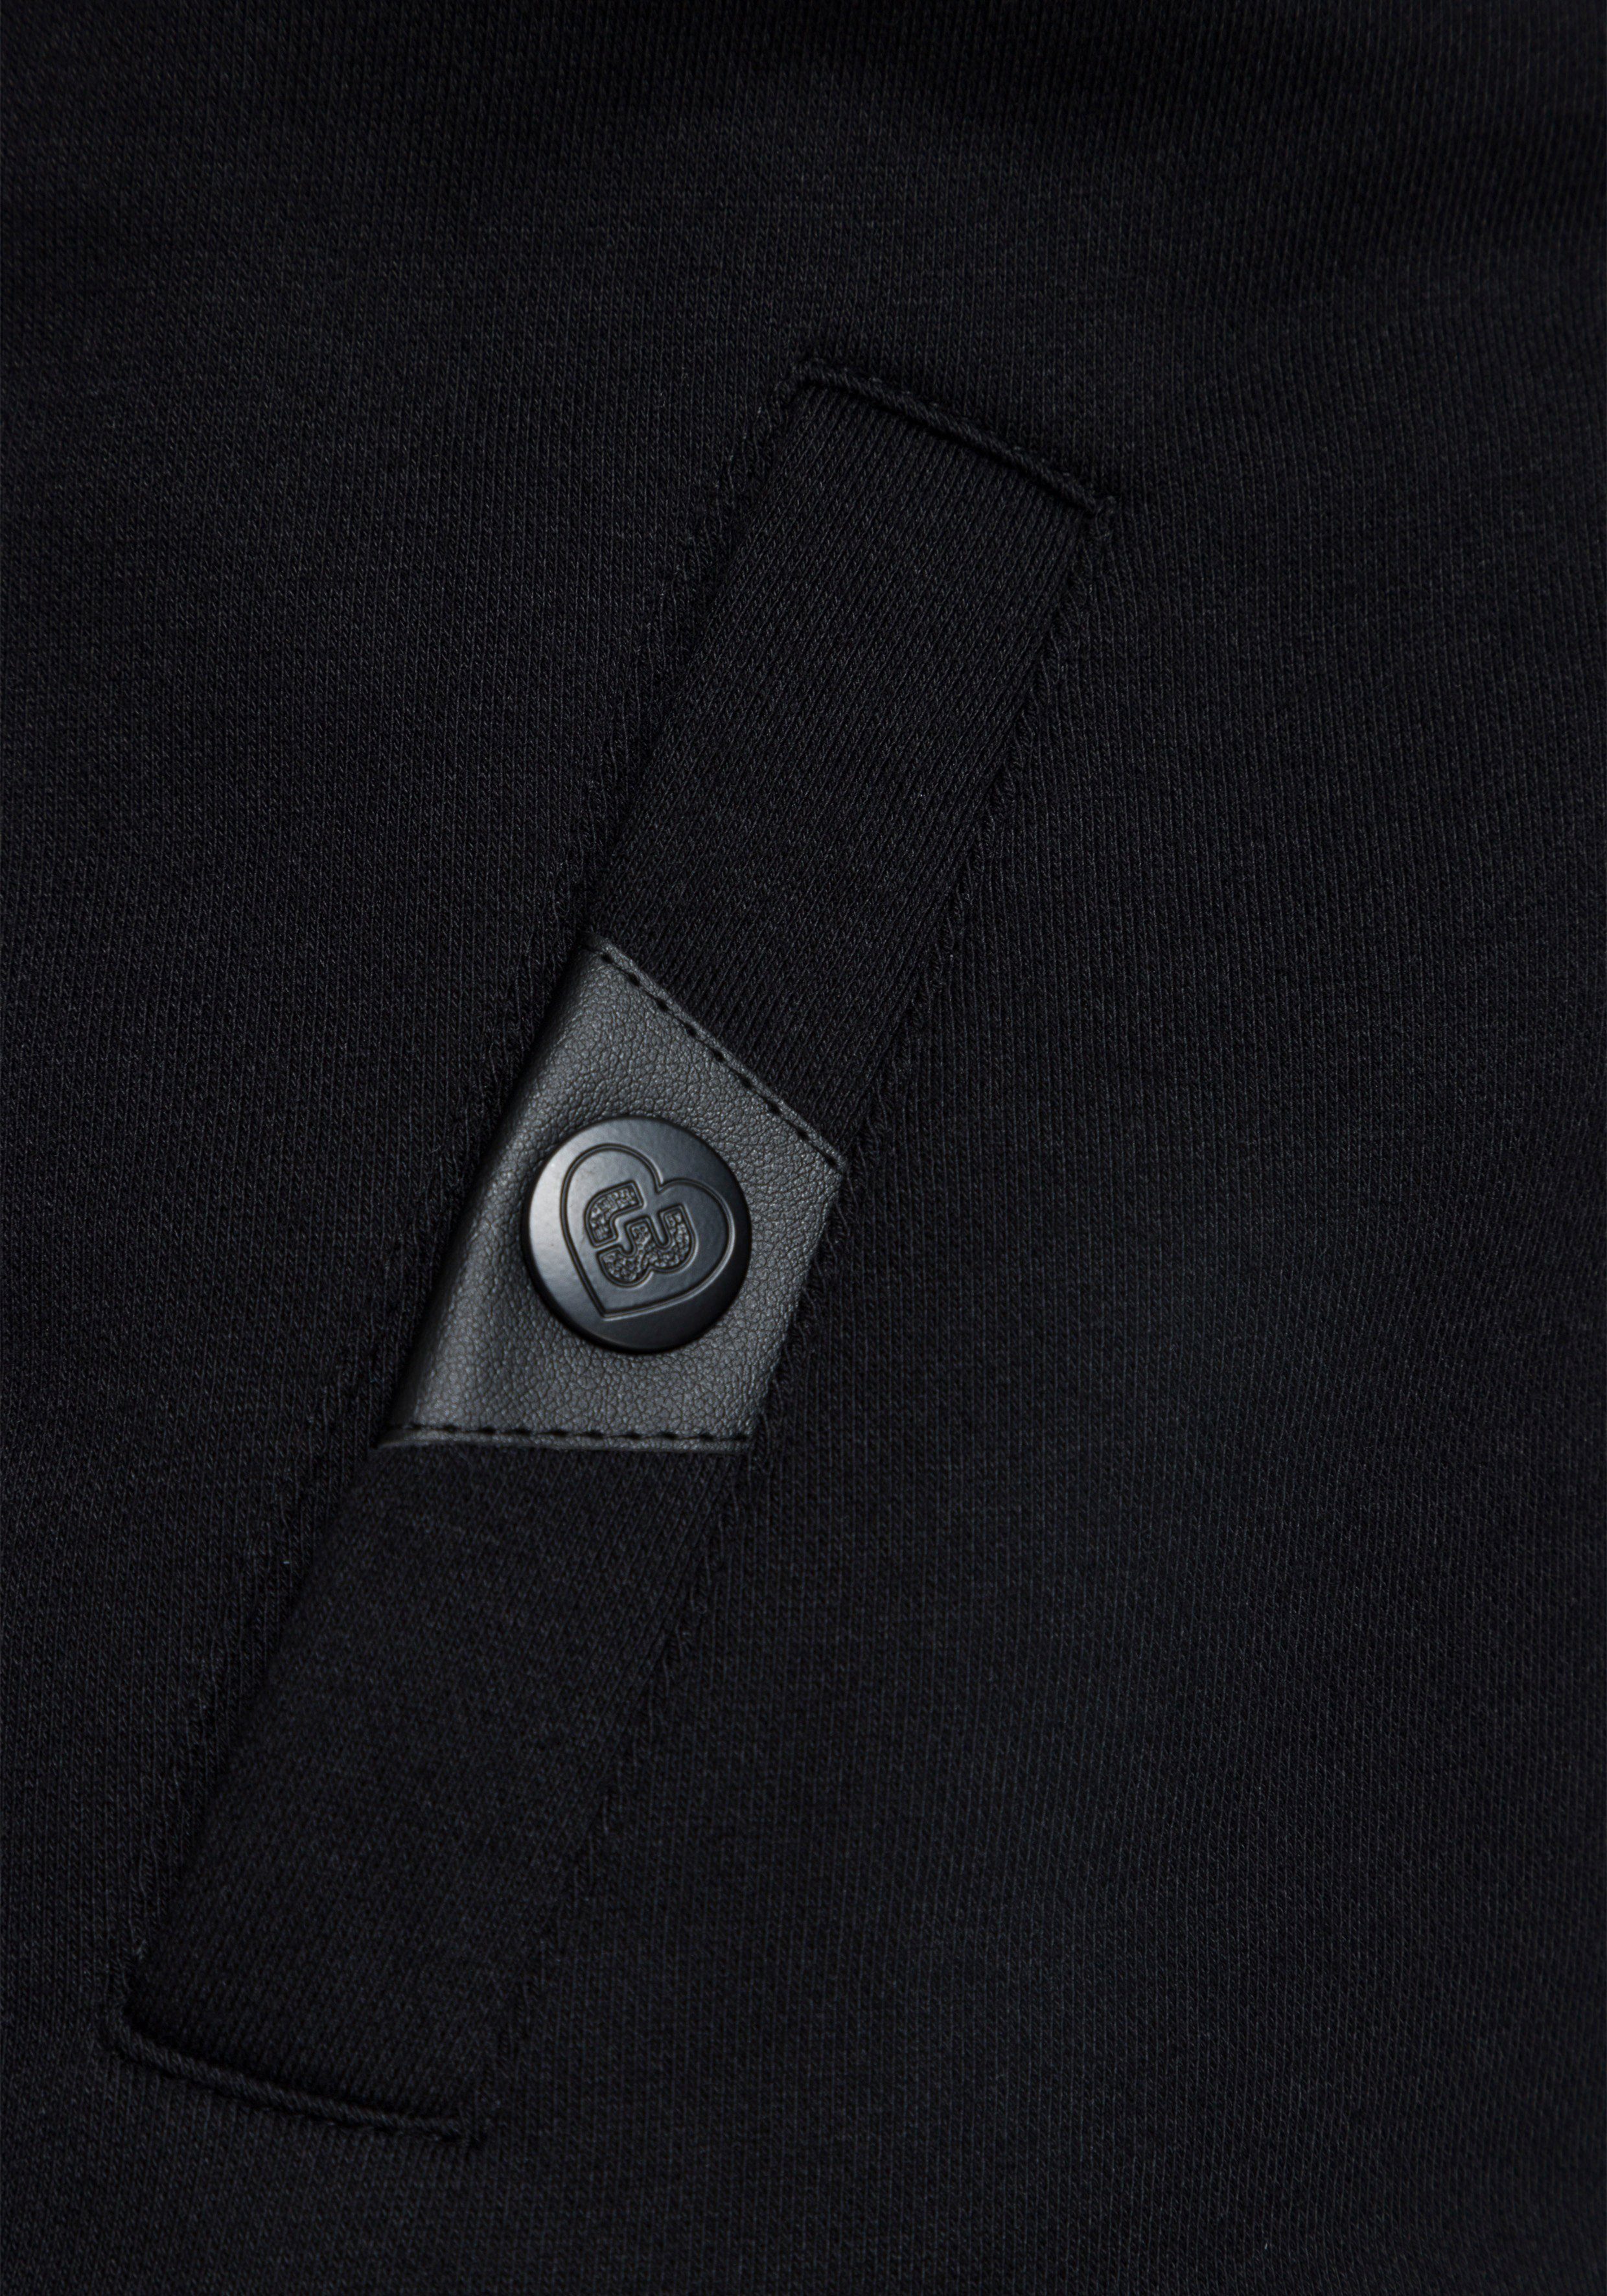 breiten BLACK RYLIE Sweatjacke Bündchen Jacke 1010 O mit Ragwear ZIP extra